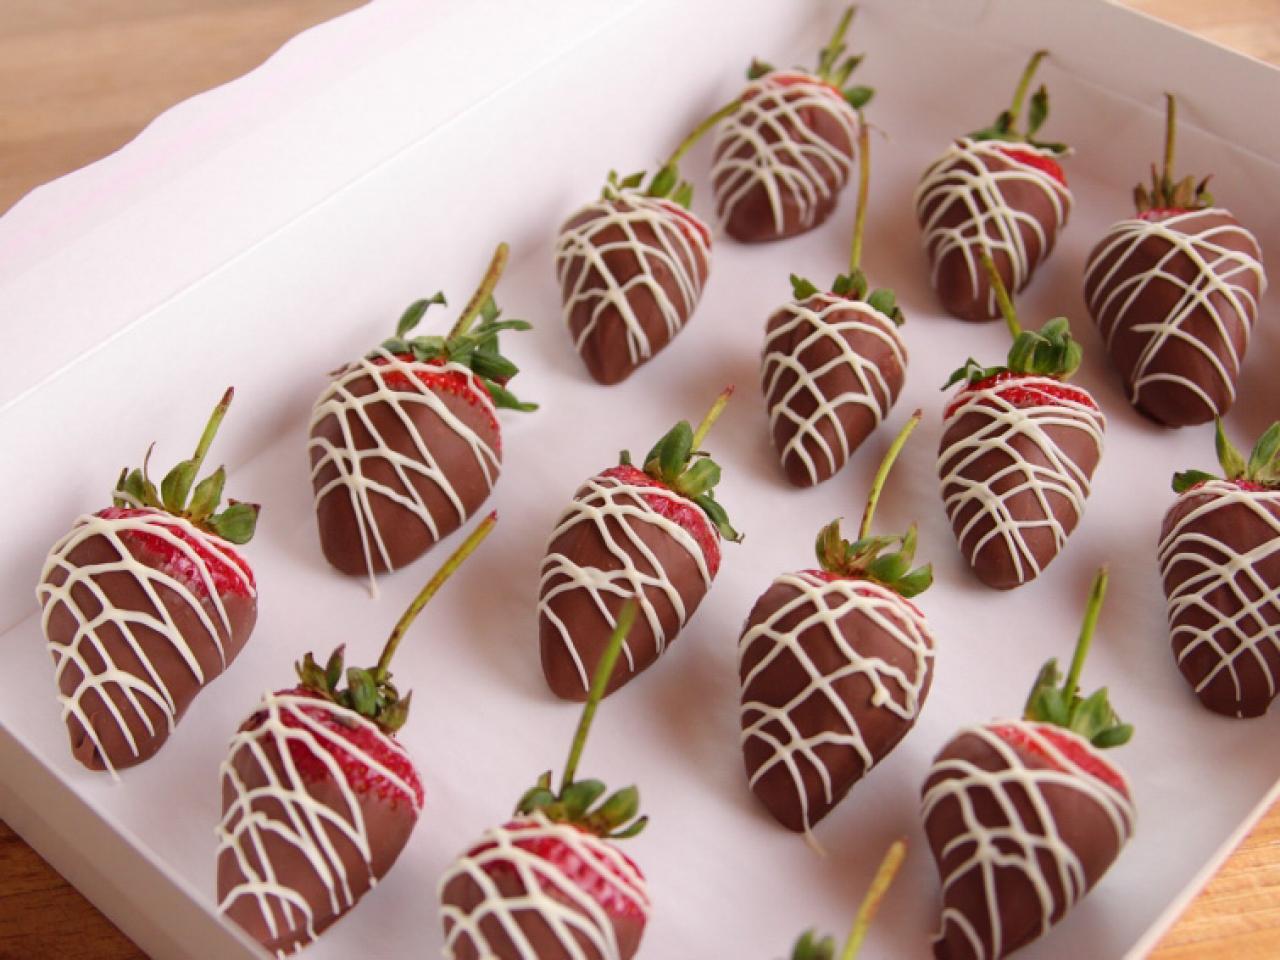 Halloween Chocolate-Covered Strawberries Recipe, Food Network Kitchen